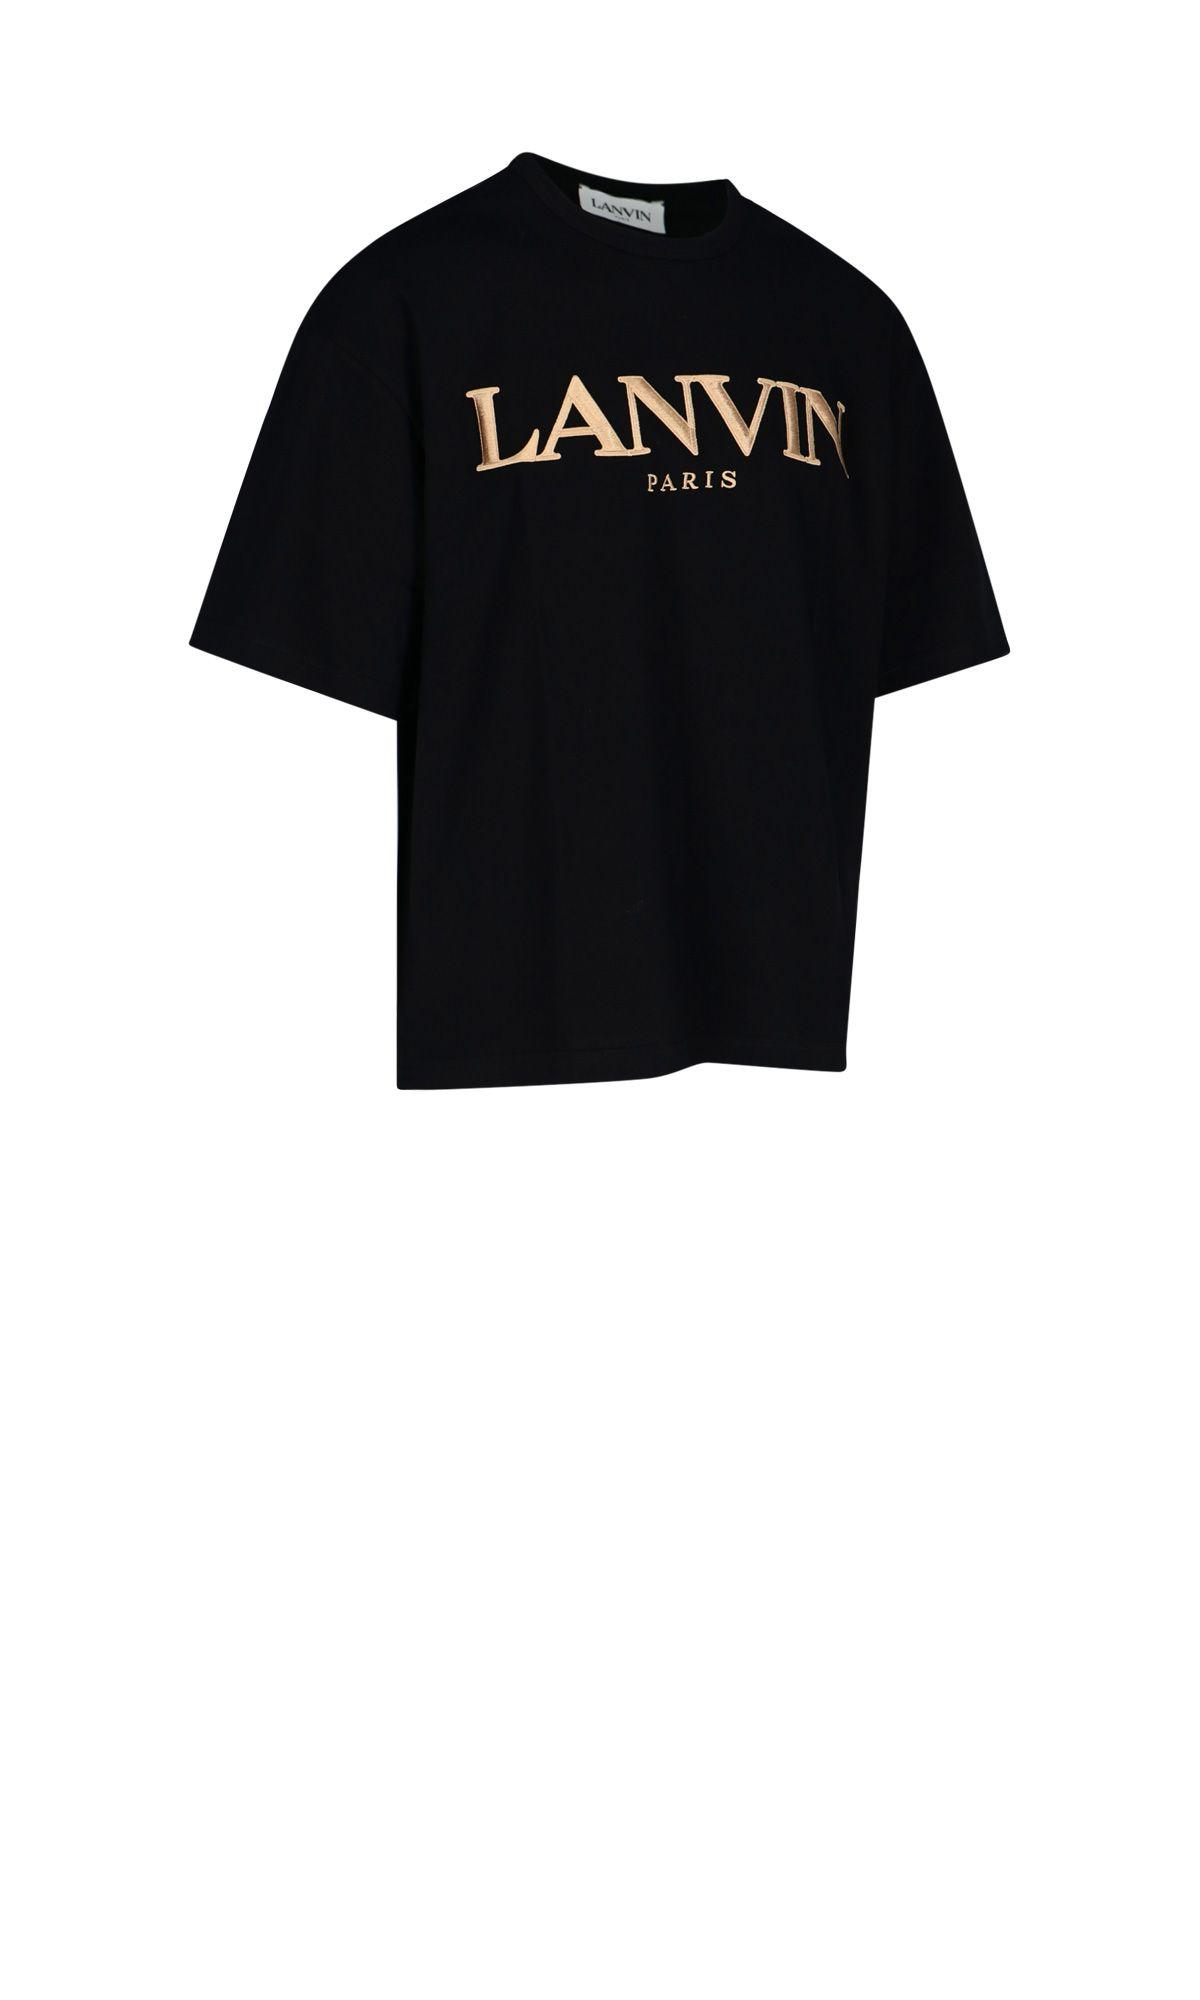 Lanvin Cotton T-shirt in Black for Men - Lyst